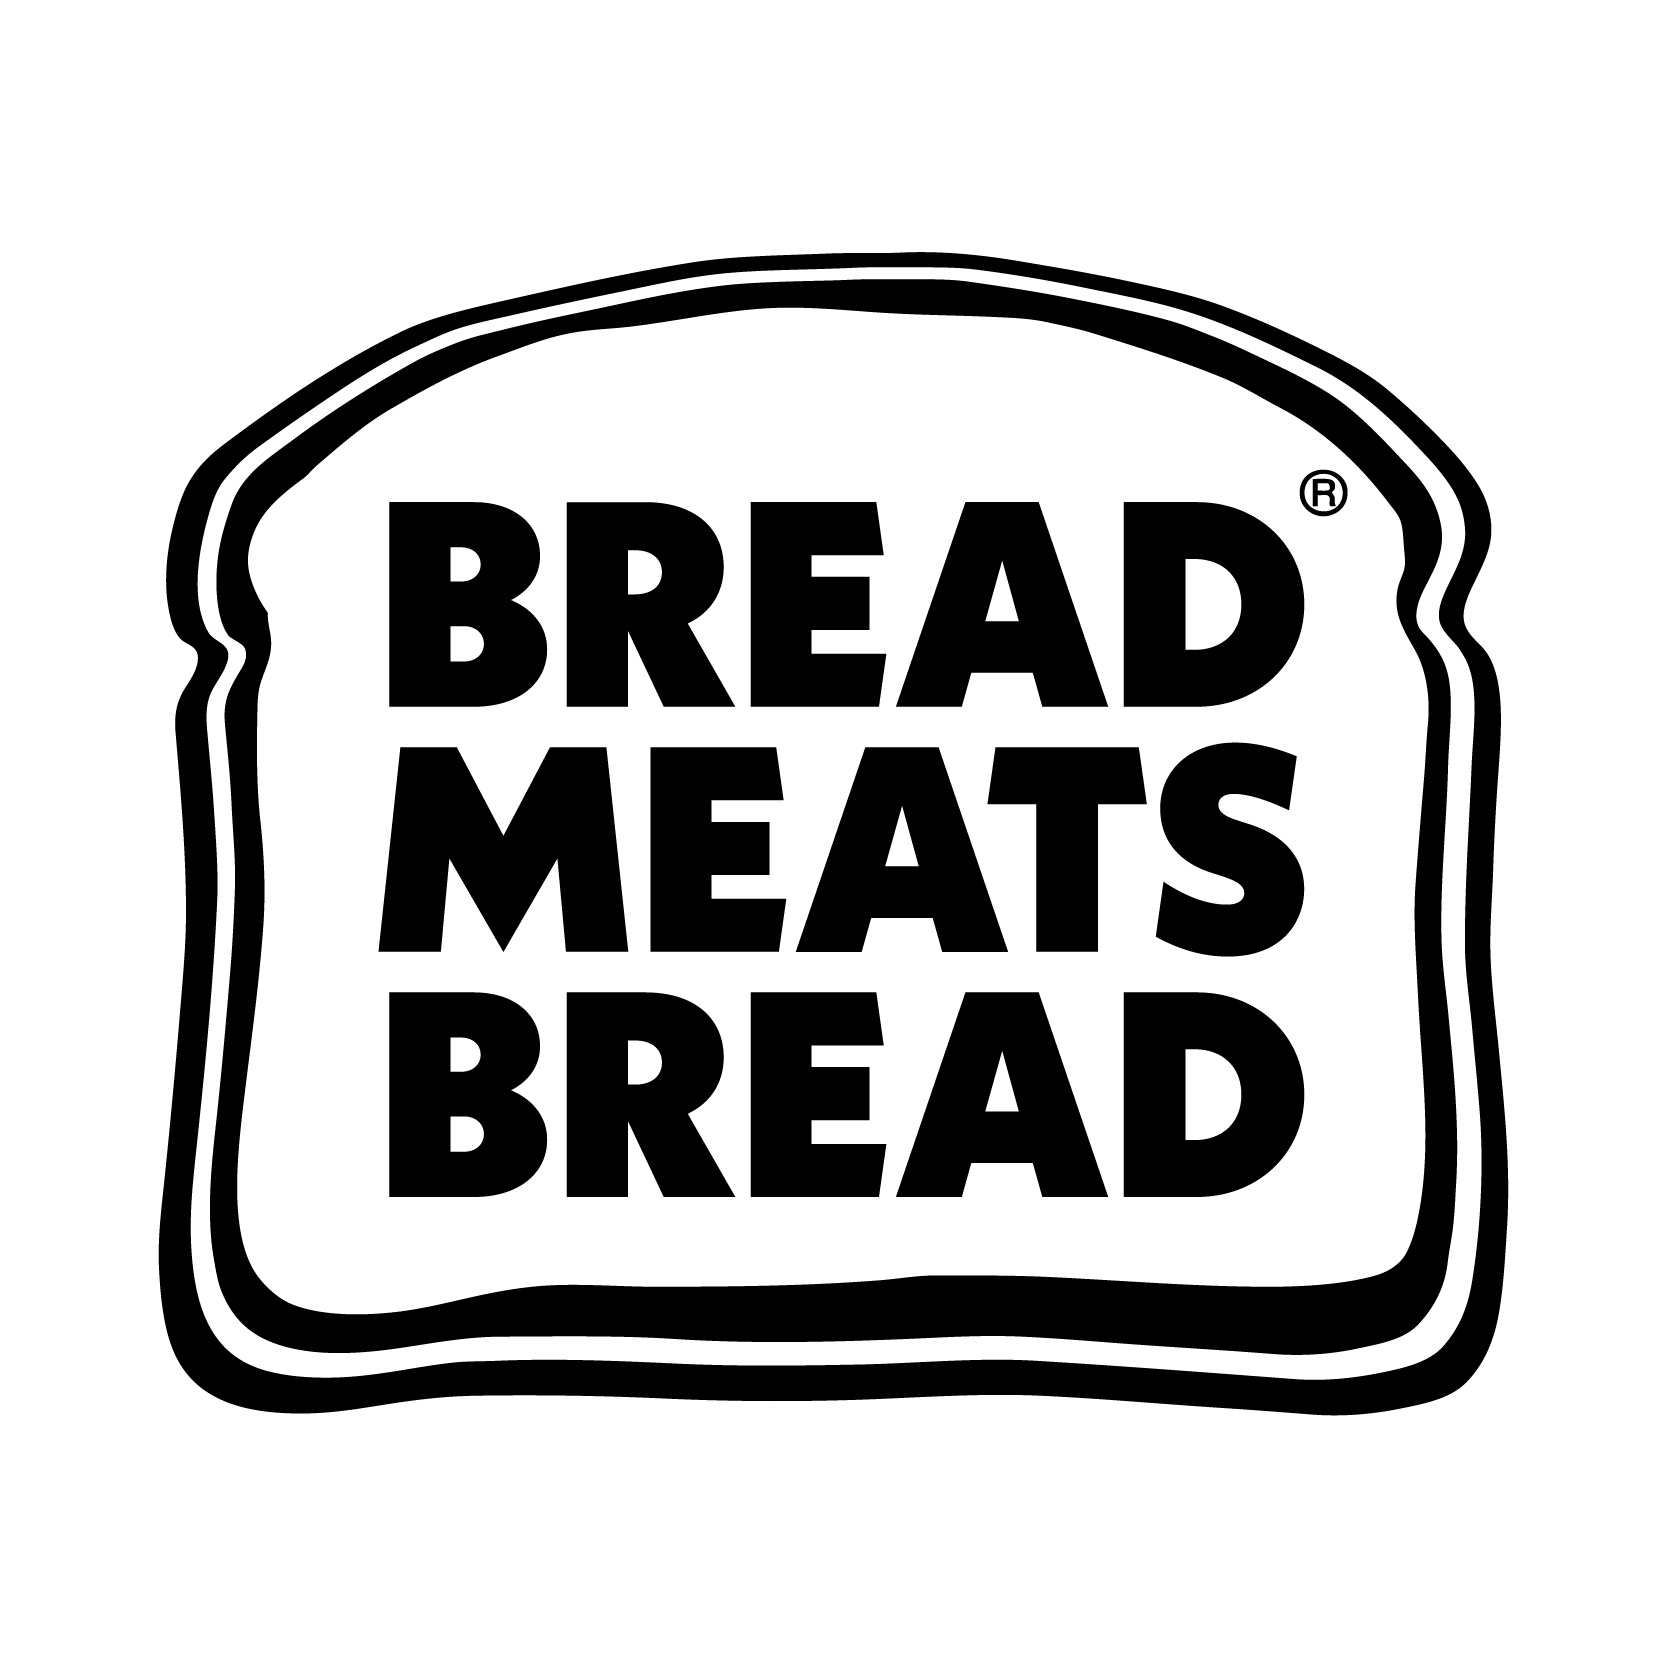 Bread Meats Bread at Silverburn